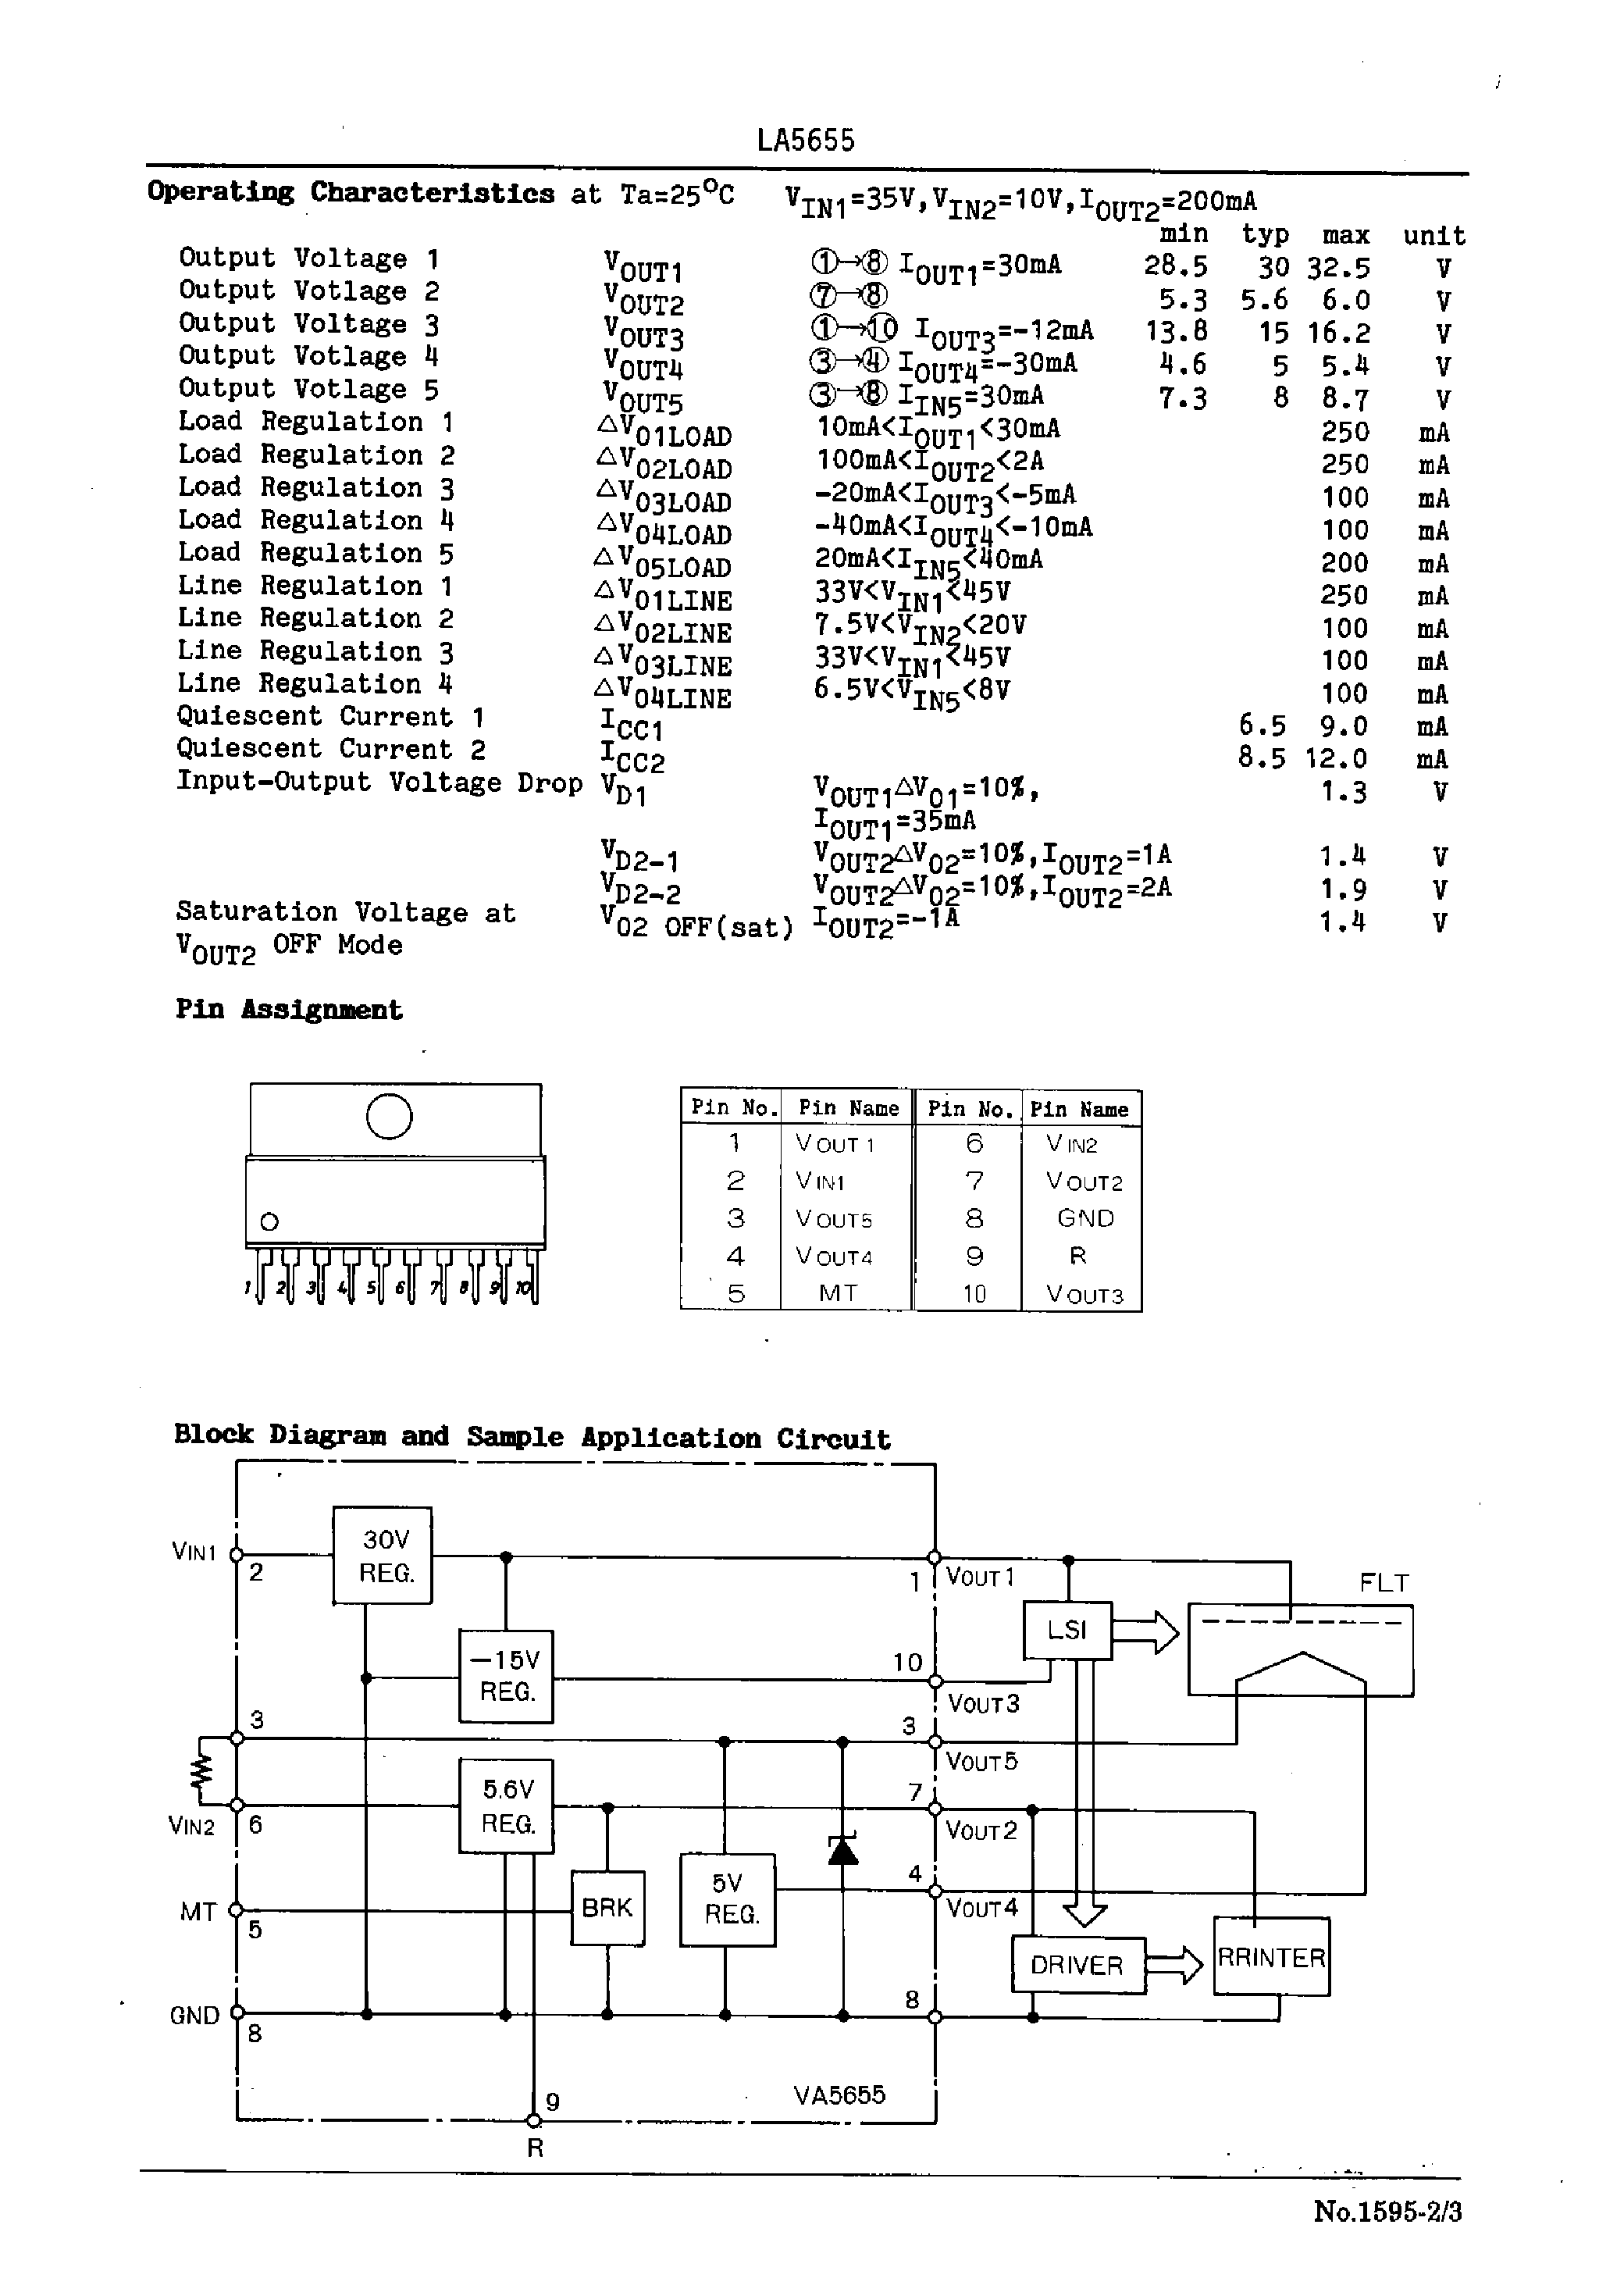 Datasheet LA5655 - Voltage Regulator for FLY Display Desk-Top Calculator page 2